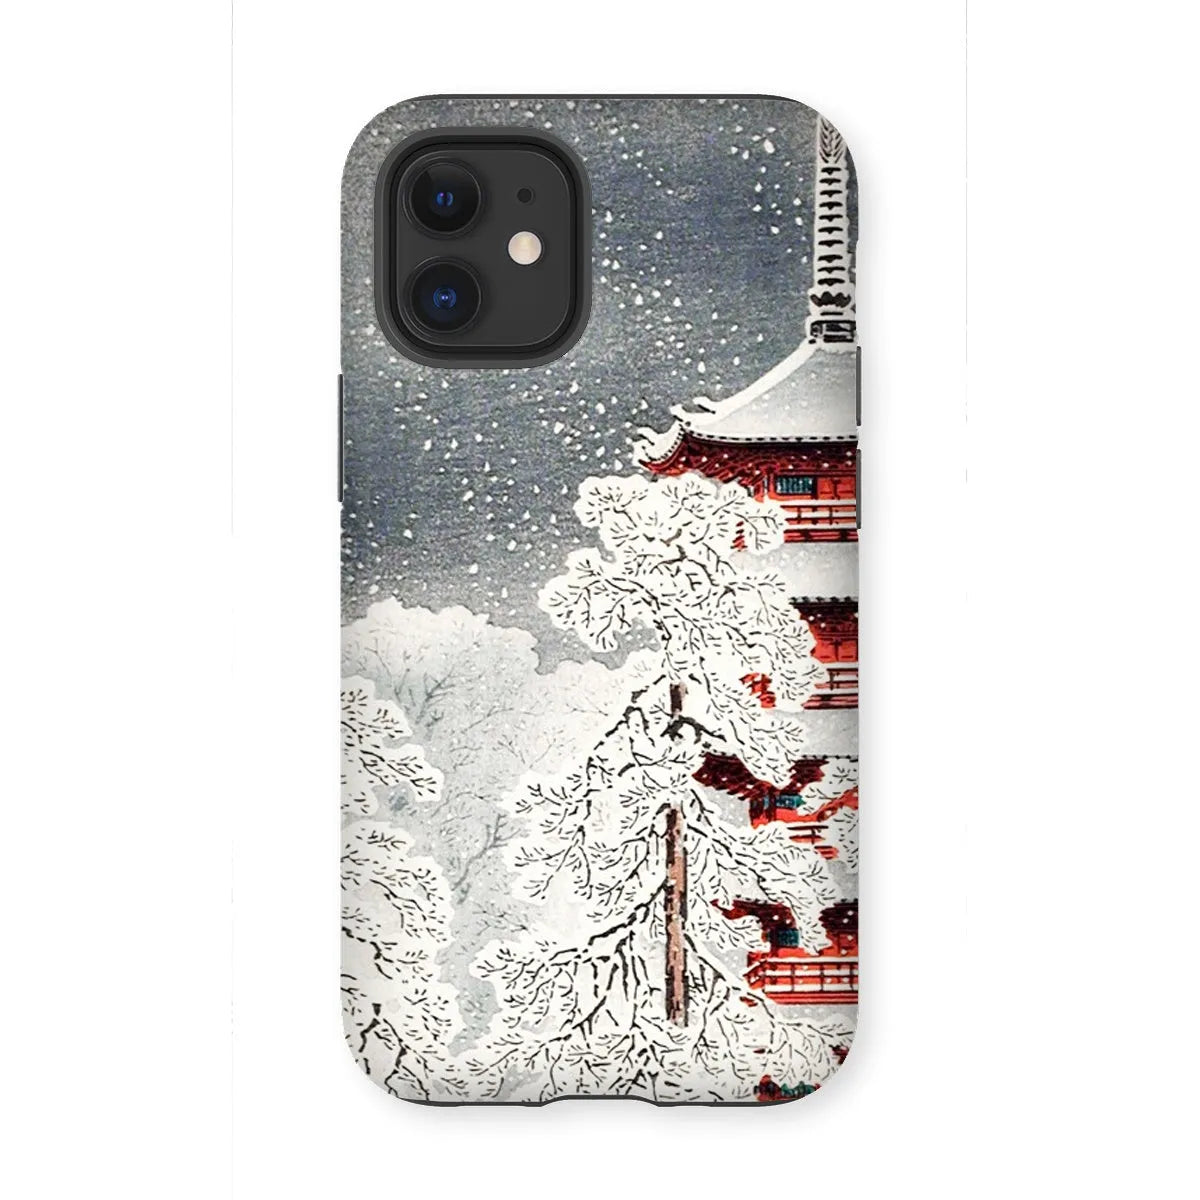 Snow At Asakusa - Shin-hanga Phone Case - Takahashi Shōtei - Iphone 12 Mini / Matte - Mobile Phone Cases - Aesthetic Art